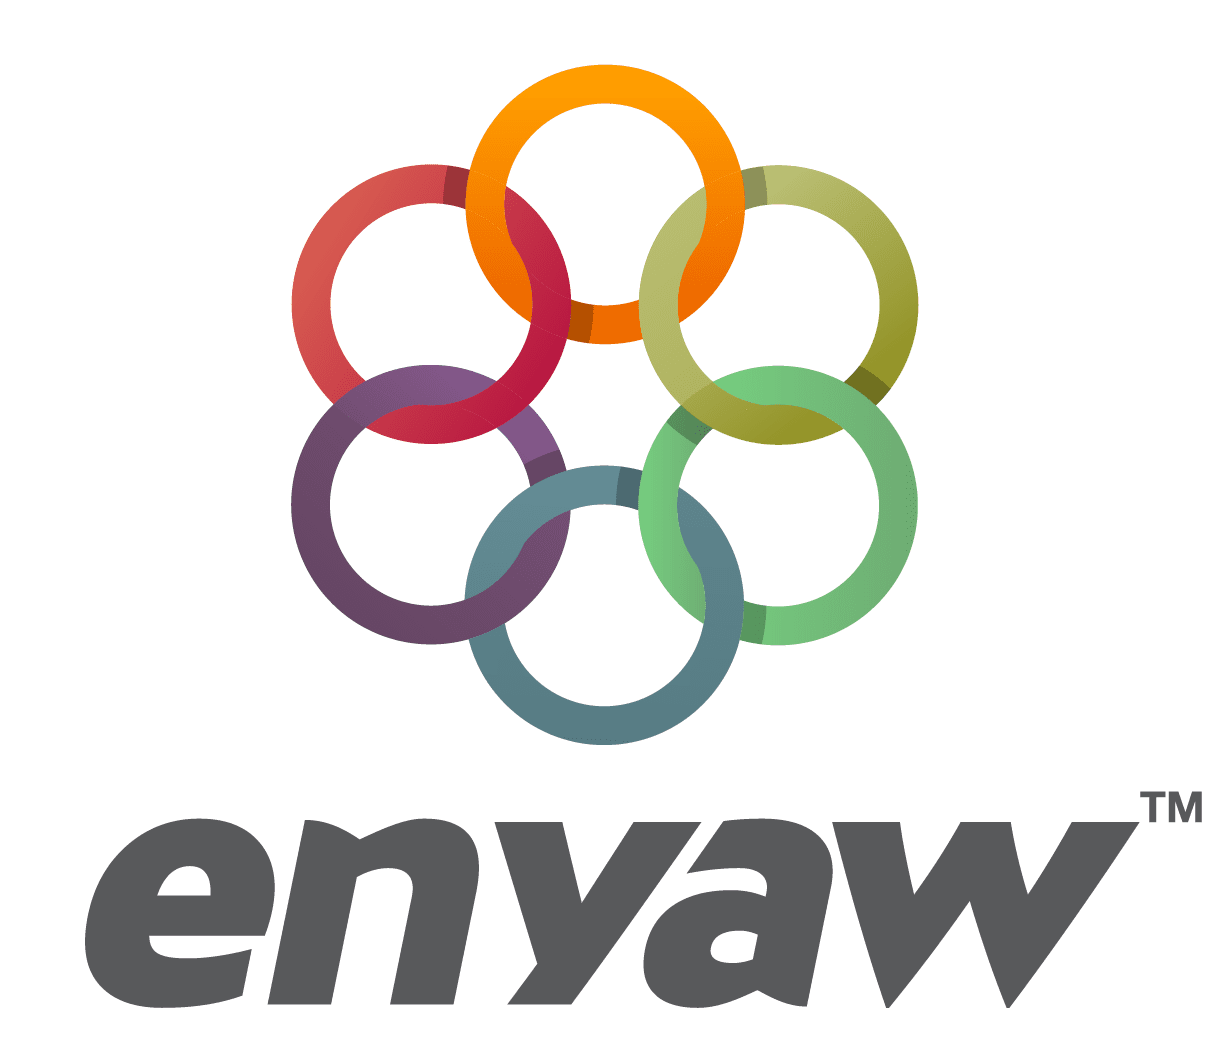 The Enyaw Group